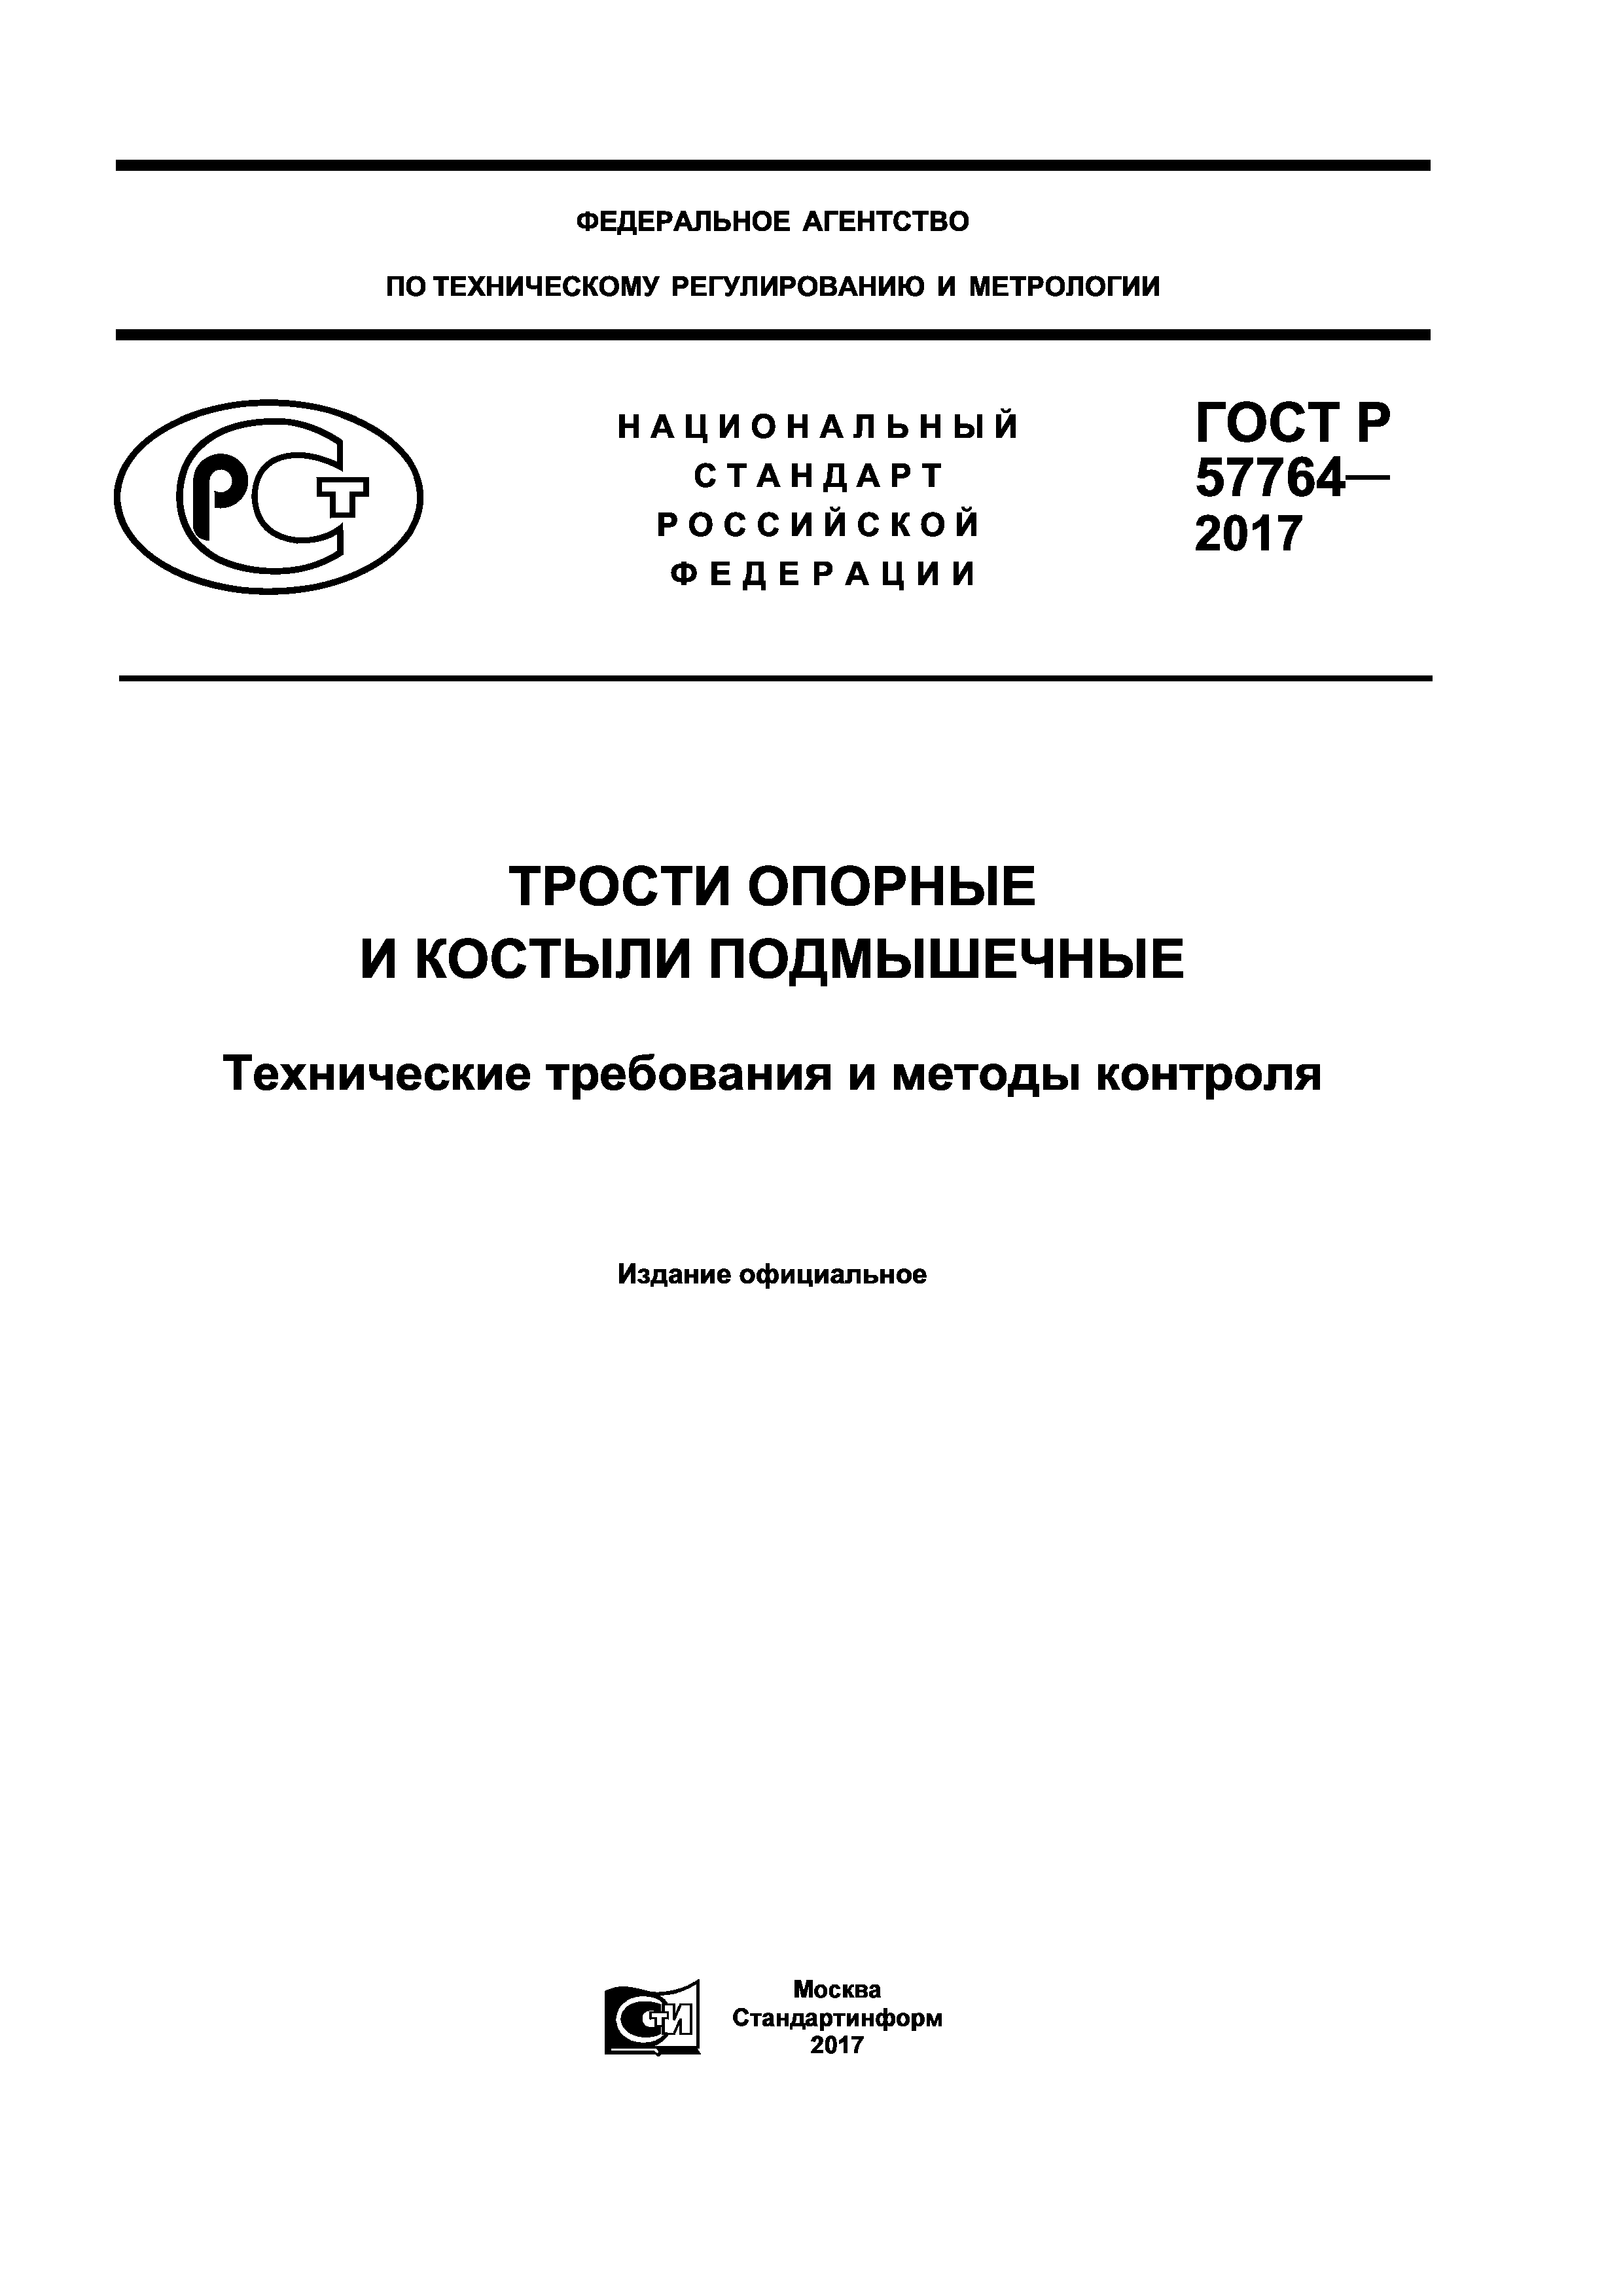 ГОСТ Р 57764-2017